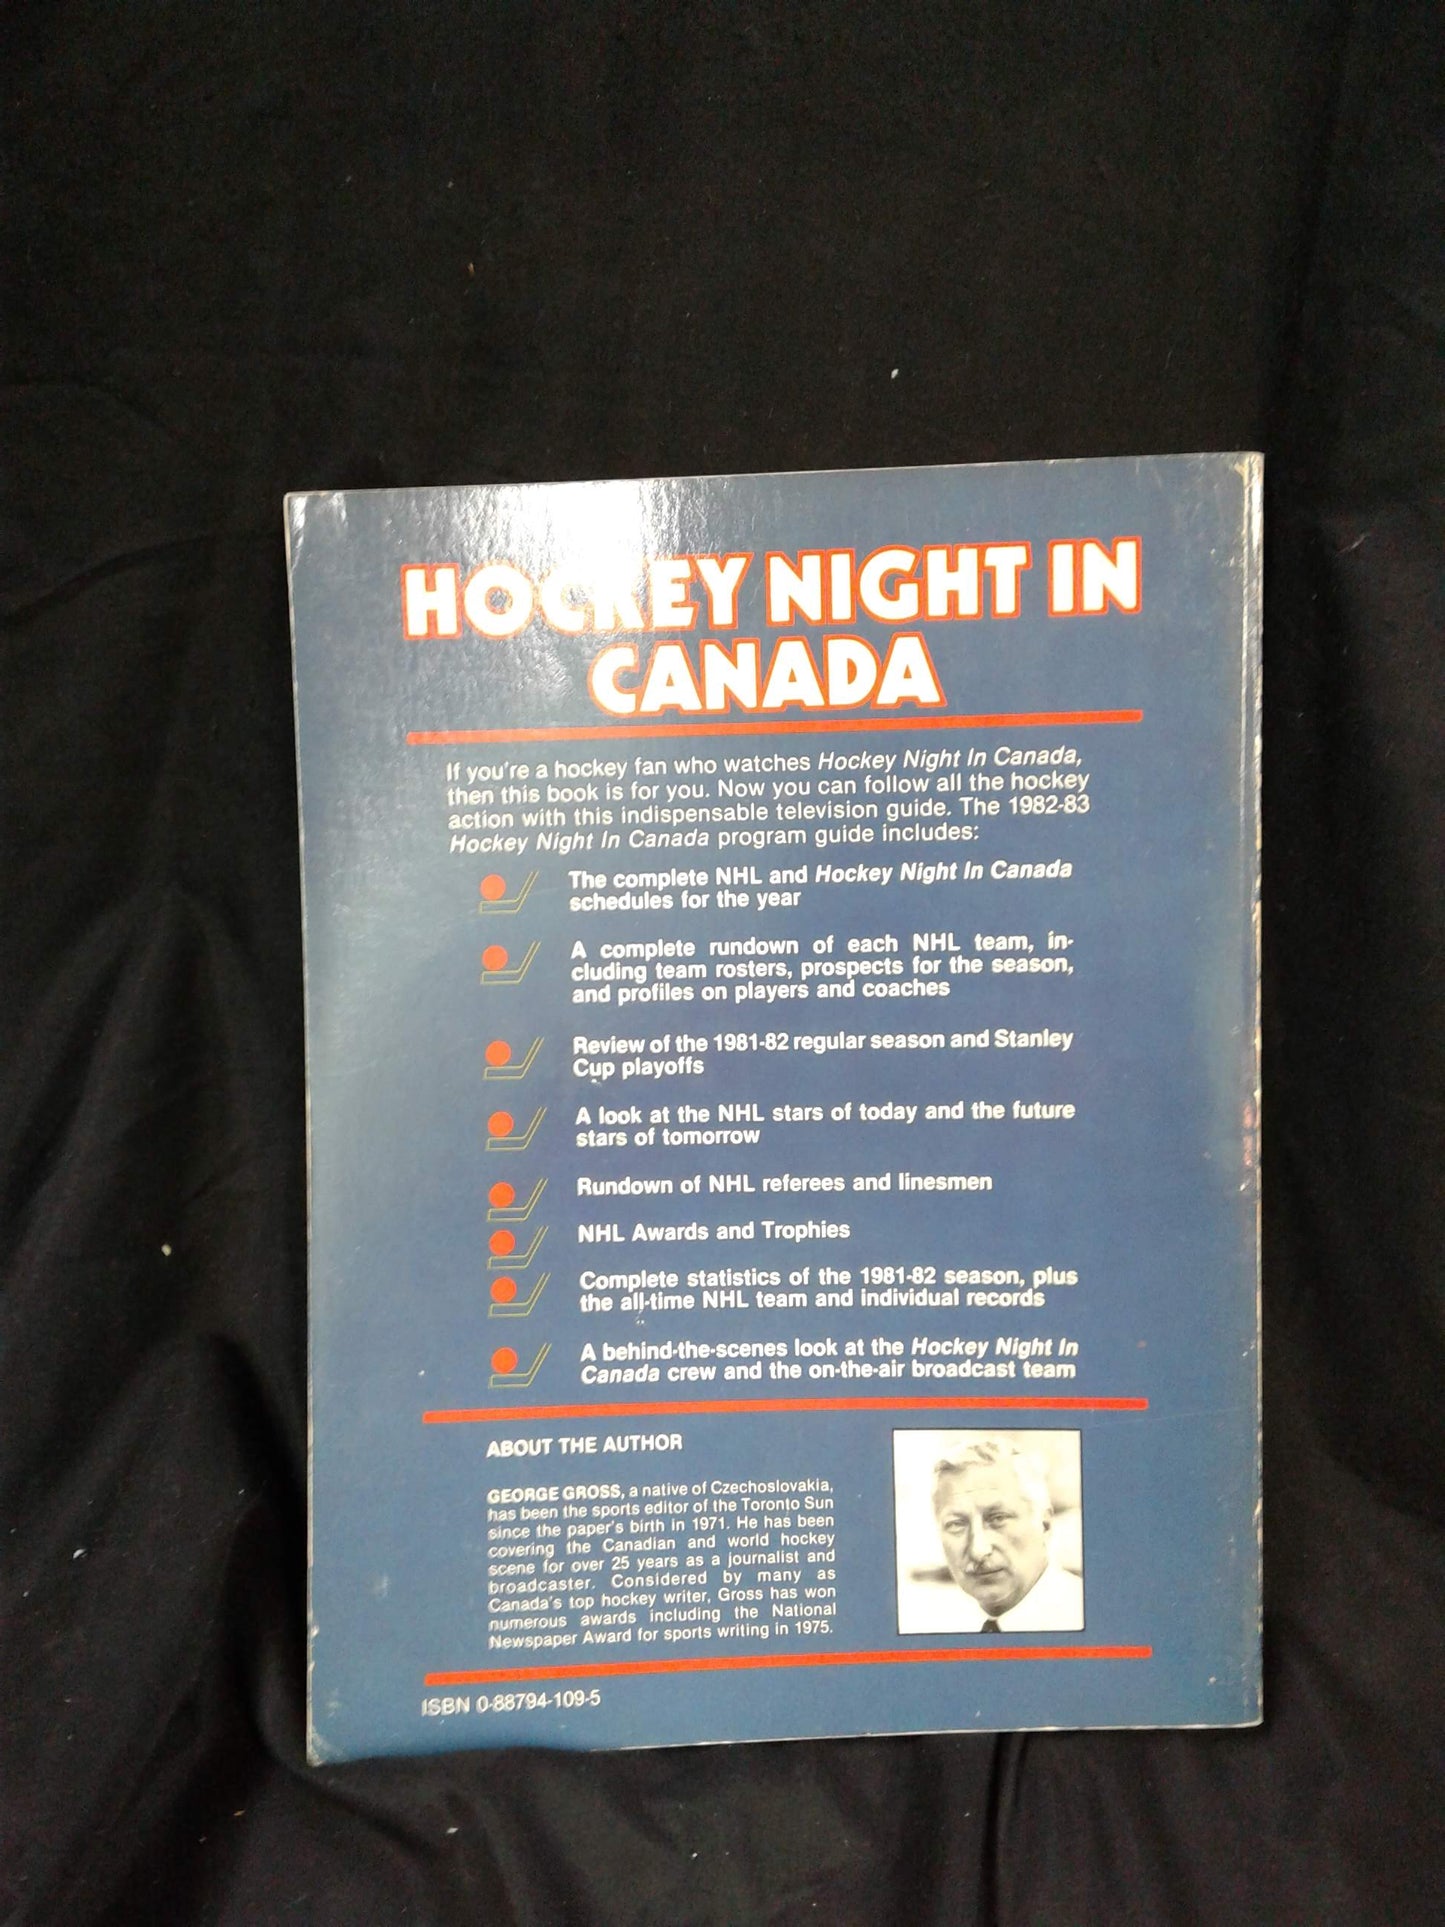 Hockey night in Canada The 1982--83 season by George Gross